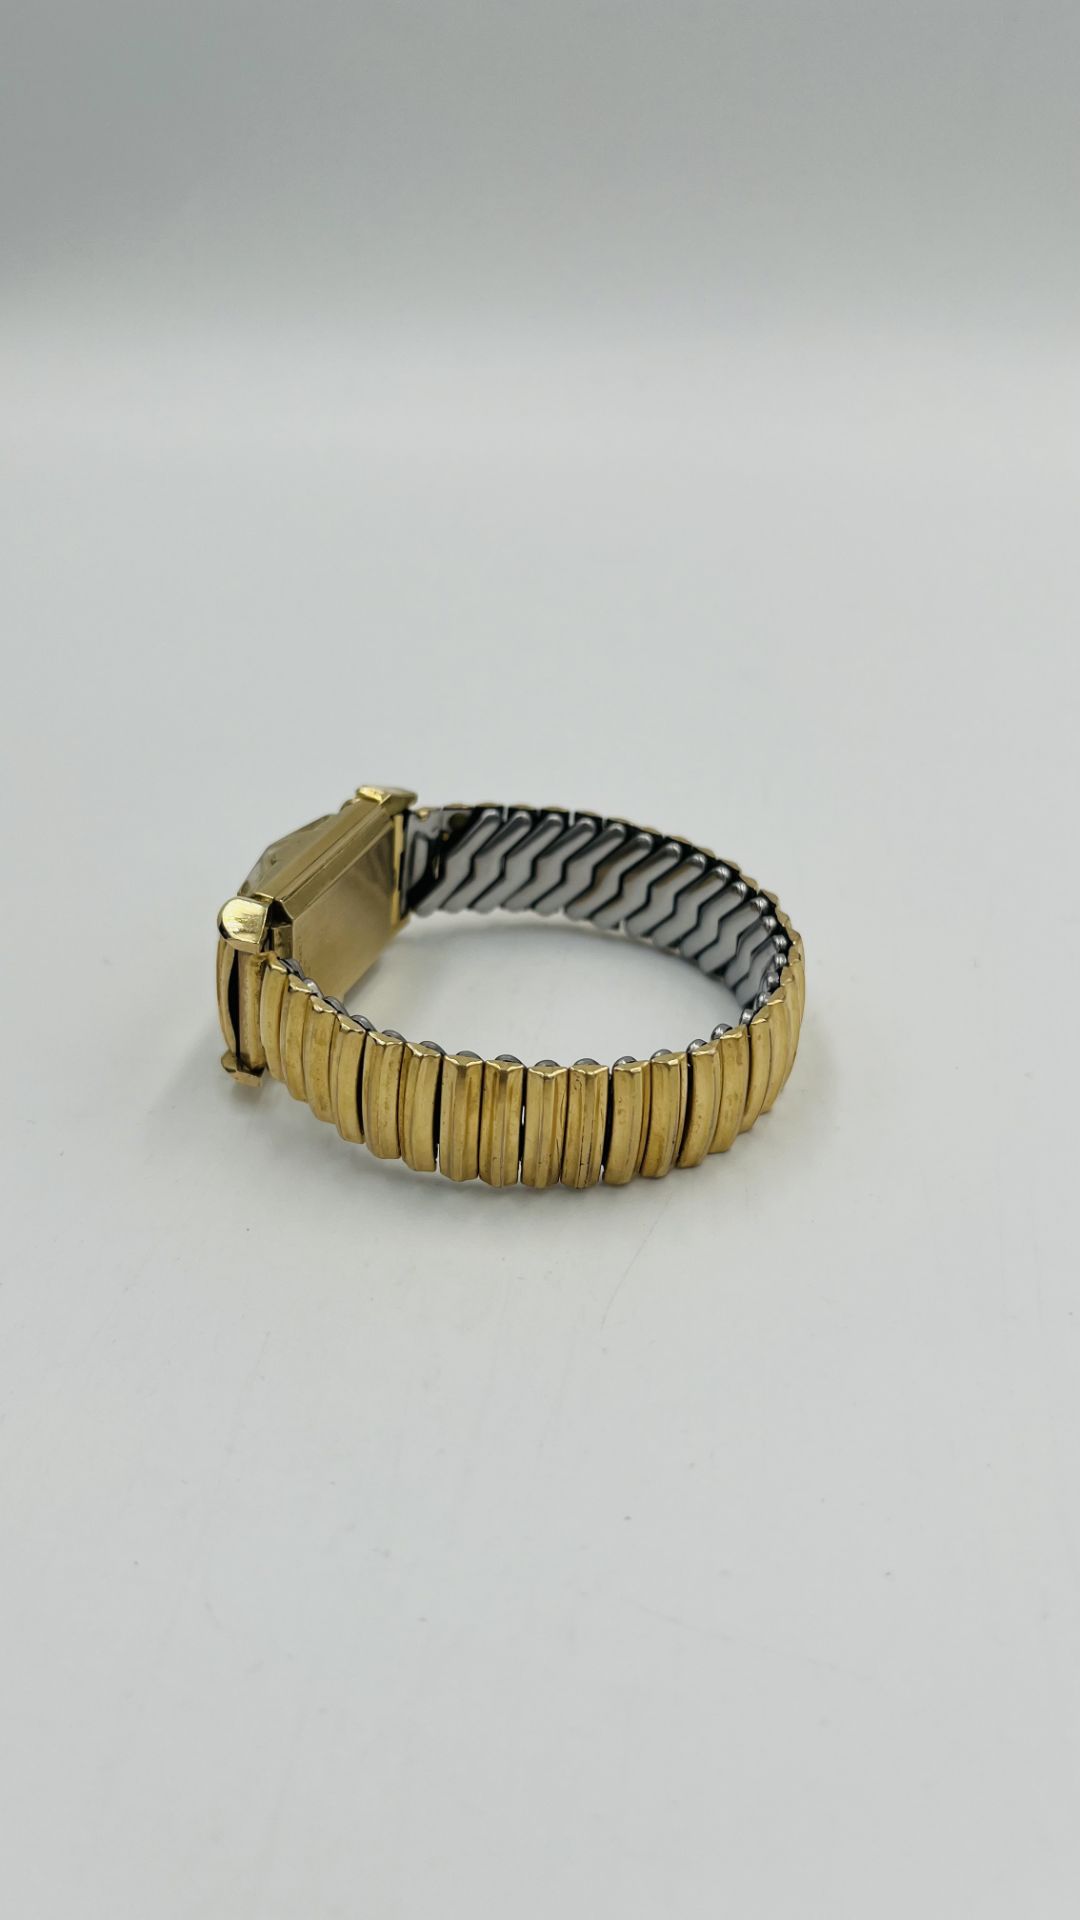 Bulova "tank" style 10k rolled gold cased manual wind wrist watch - Image 5 of 7